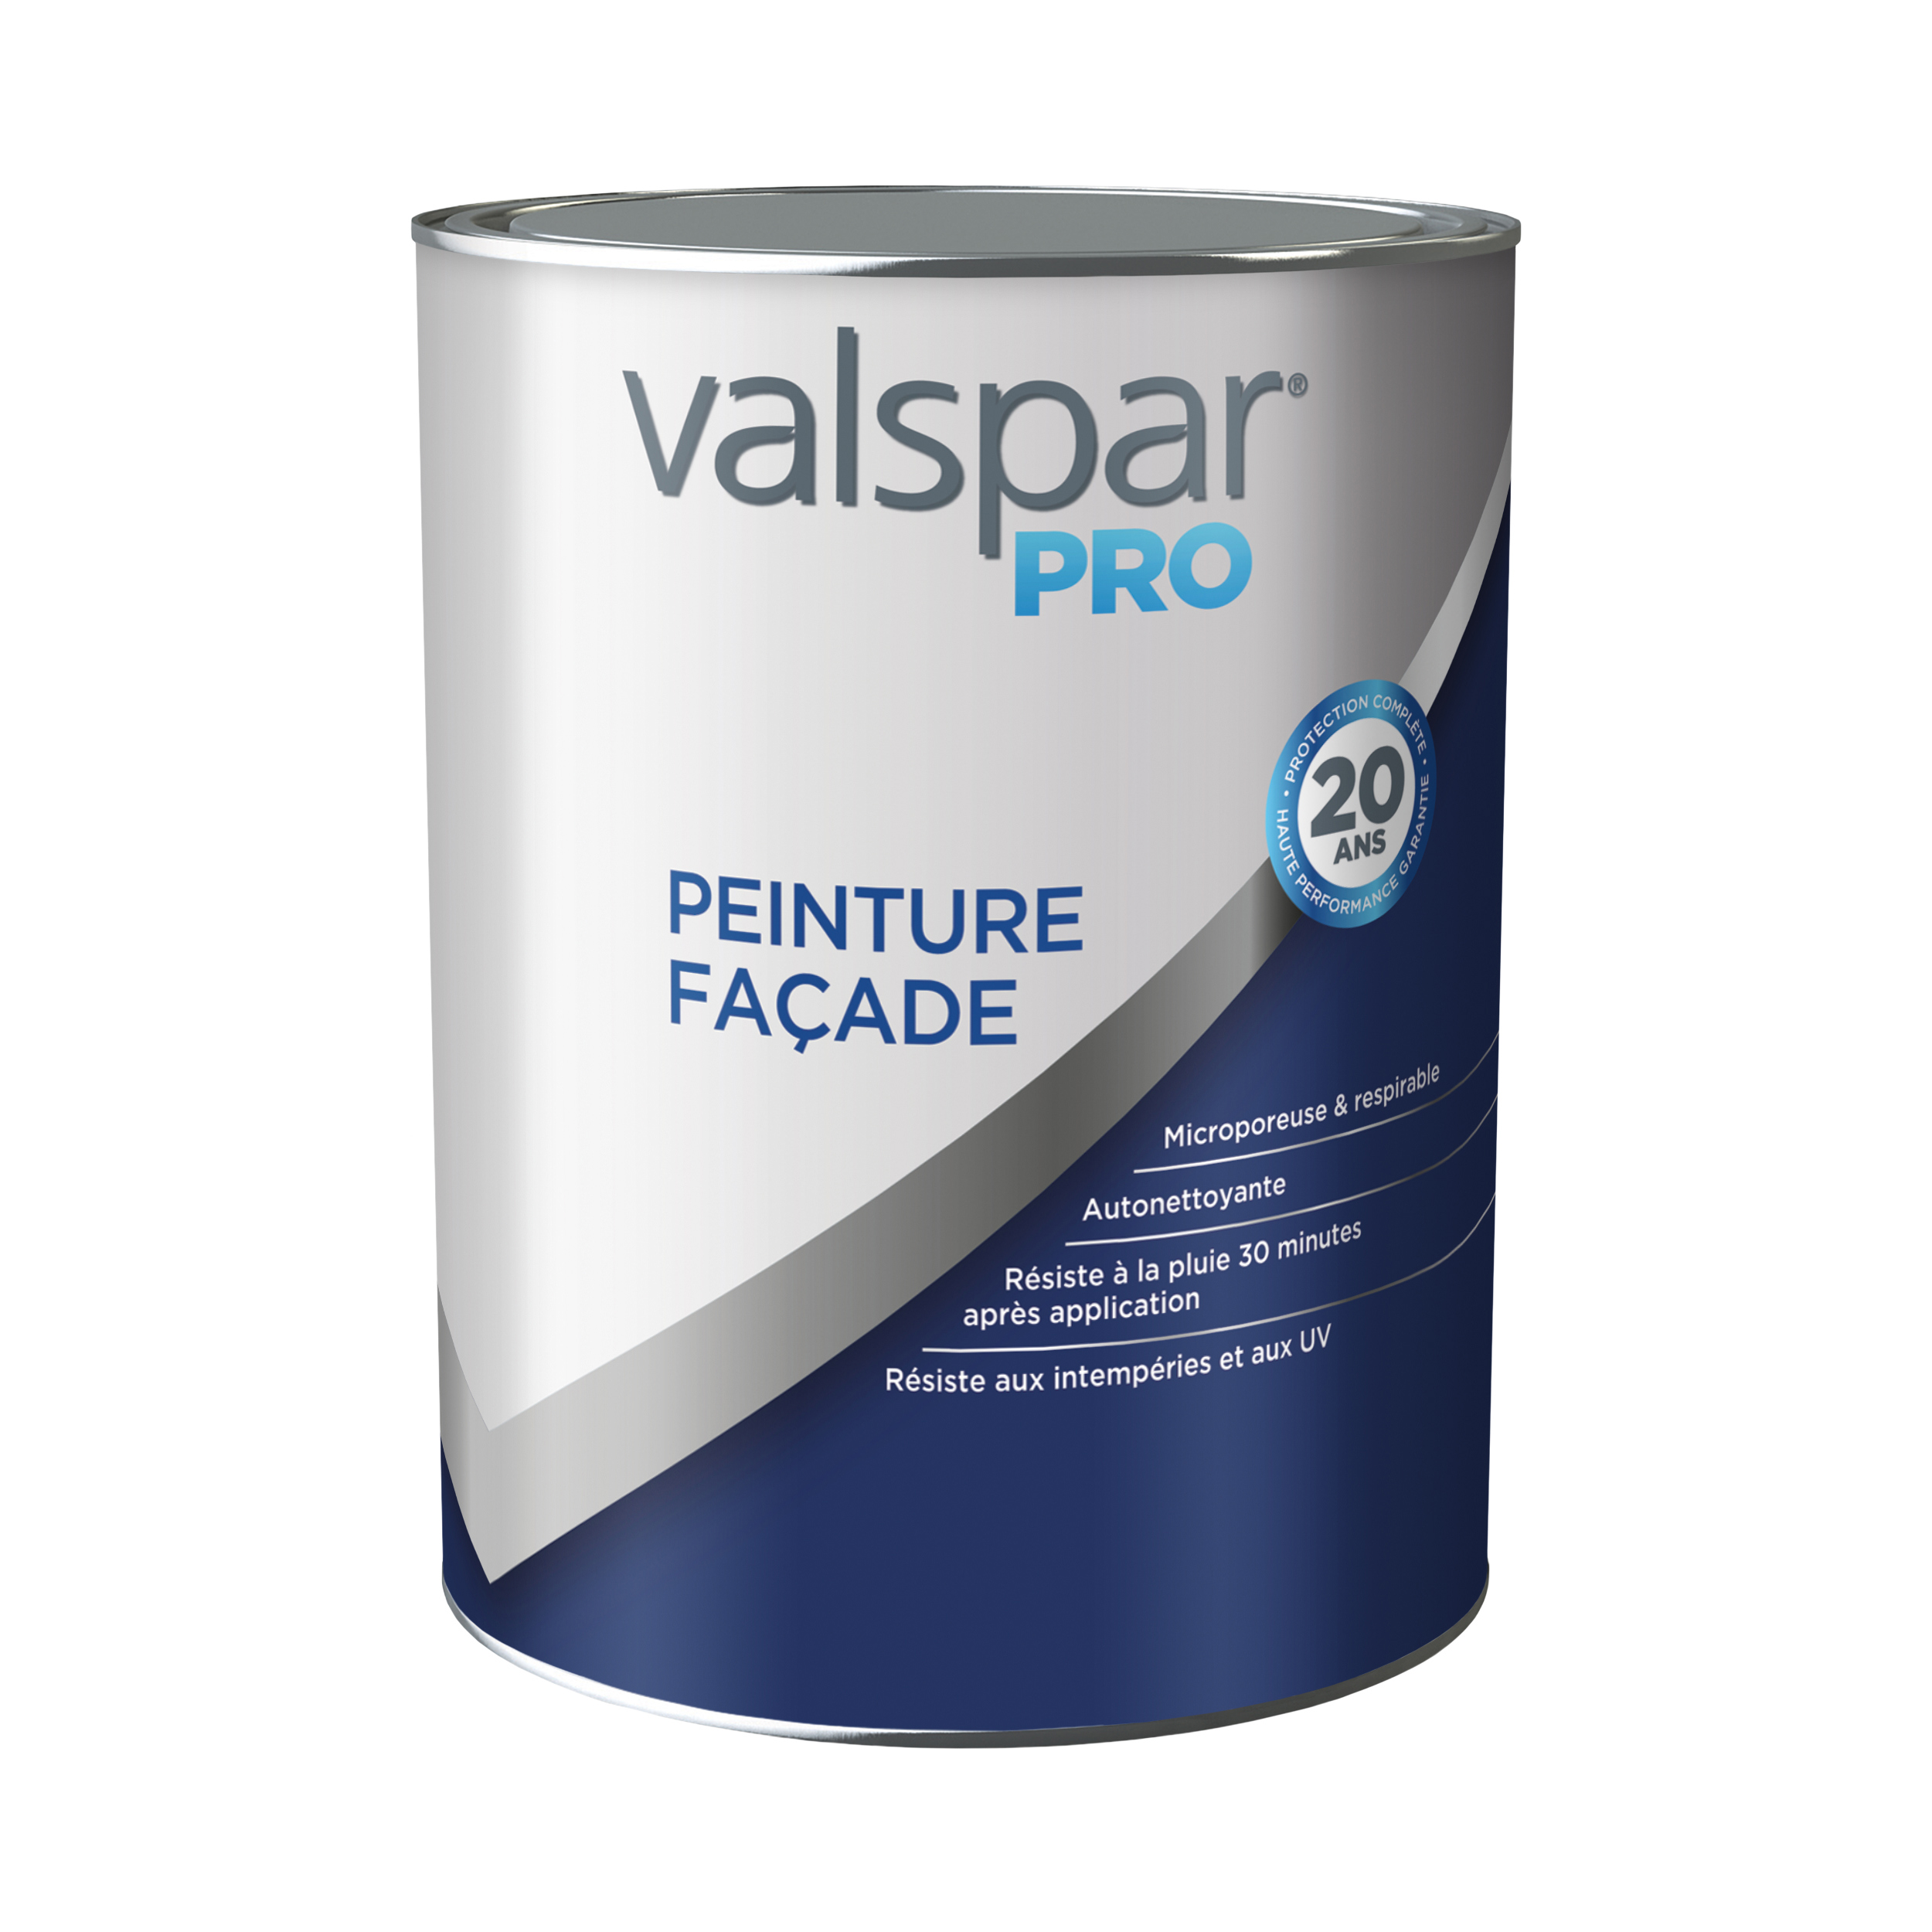 Valspar® Pro Peinture Façade